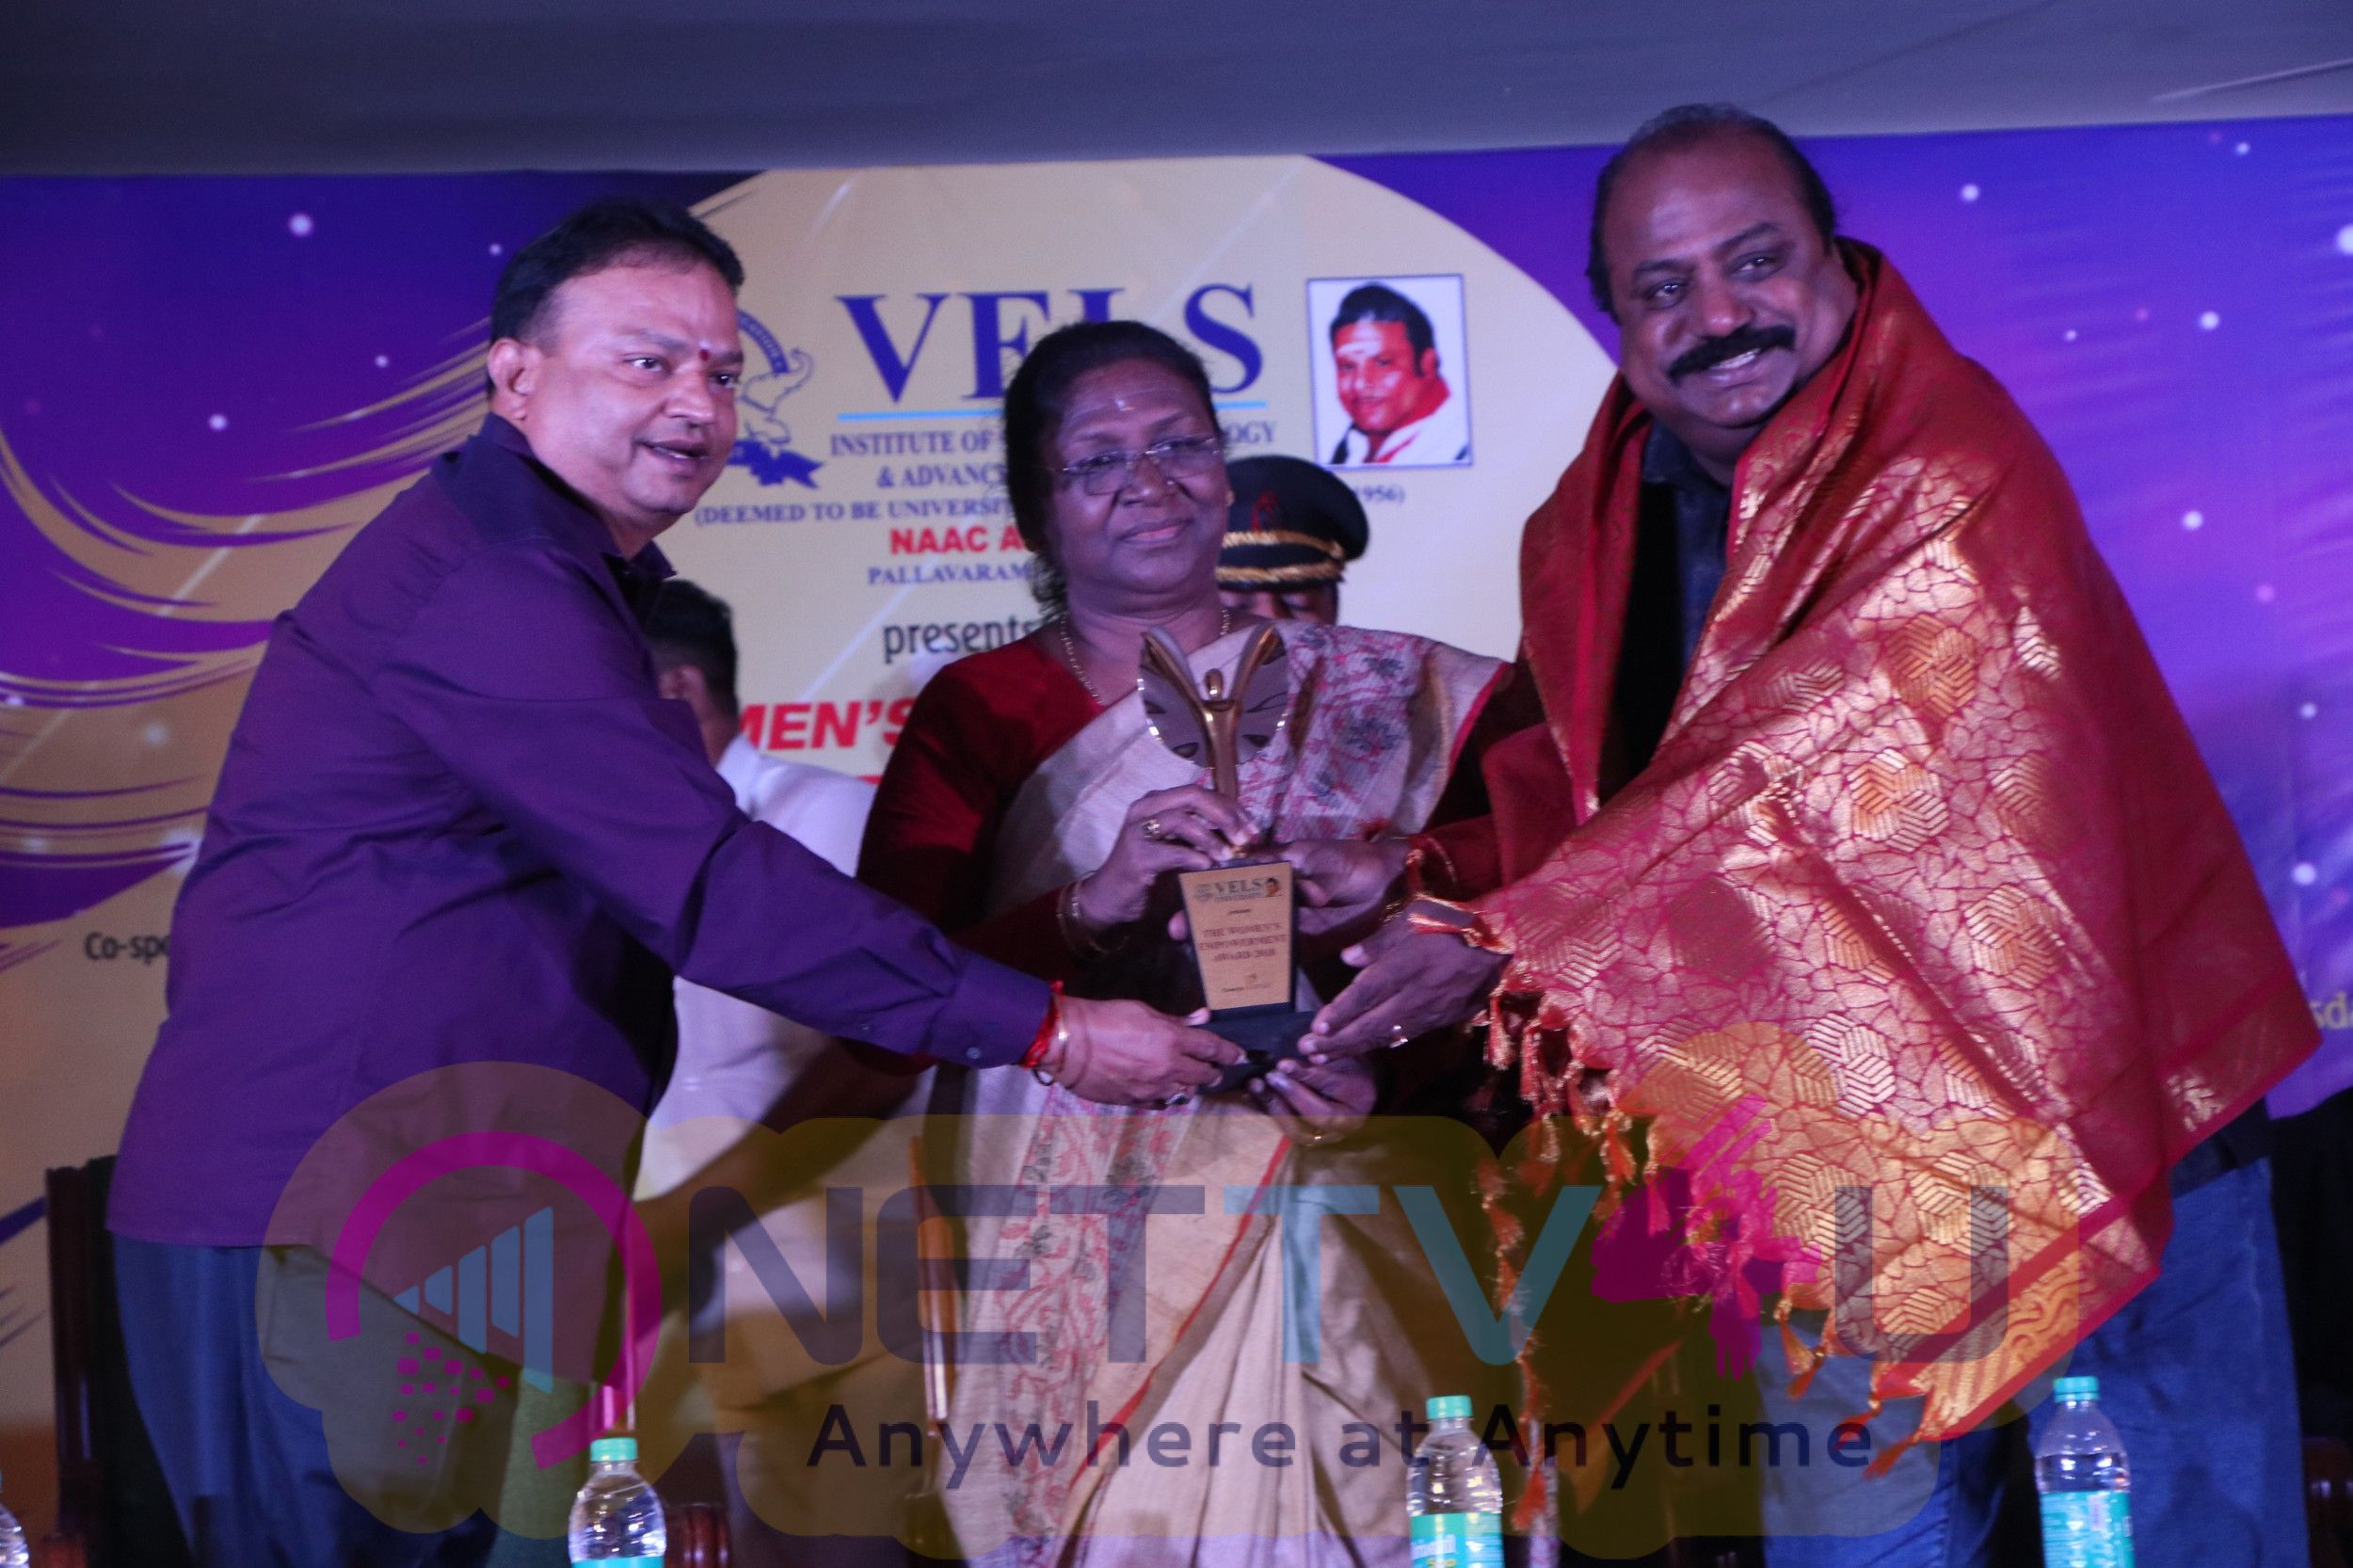 Vels University Panache Events & Branding - The Womens Empowerment Award 2018 Pics Tamil Gallery